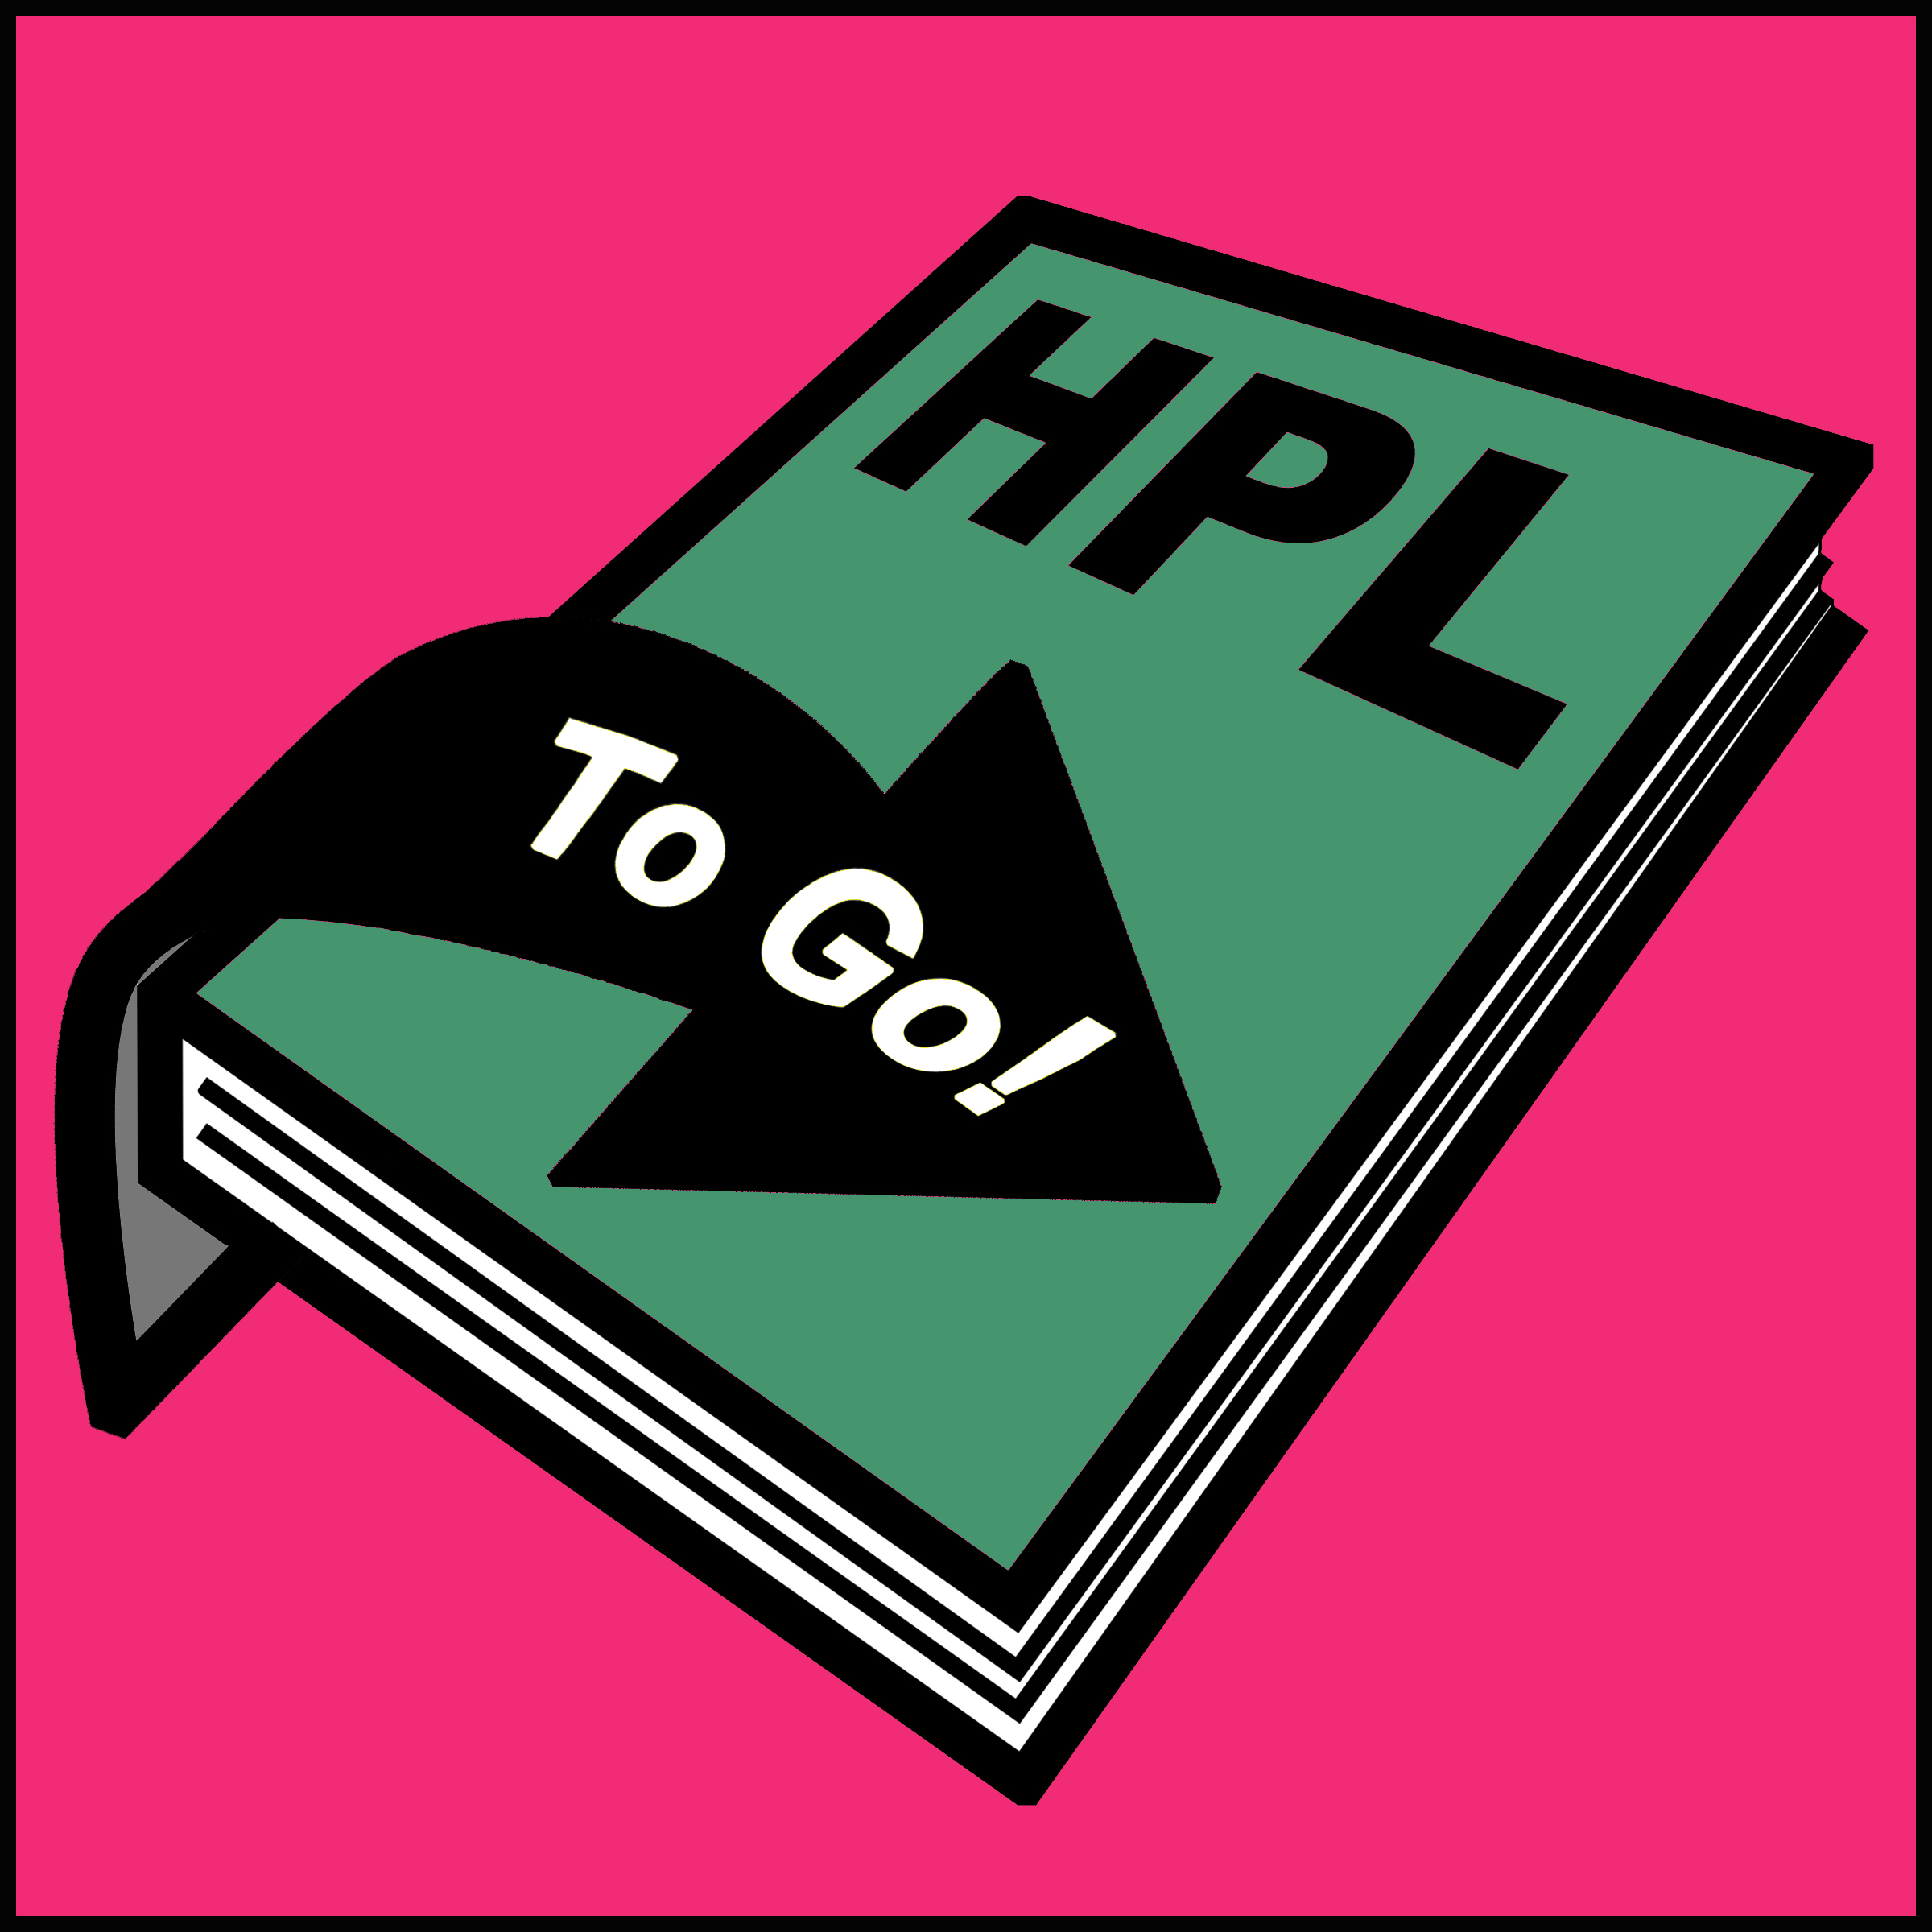 HPL to Go logo